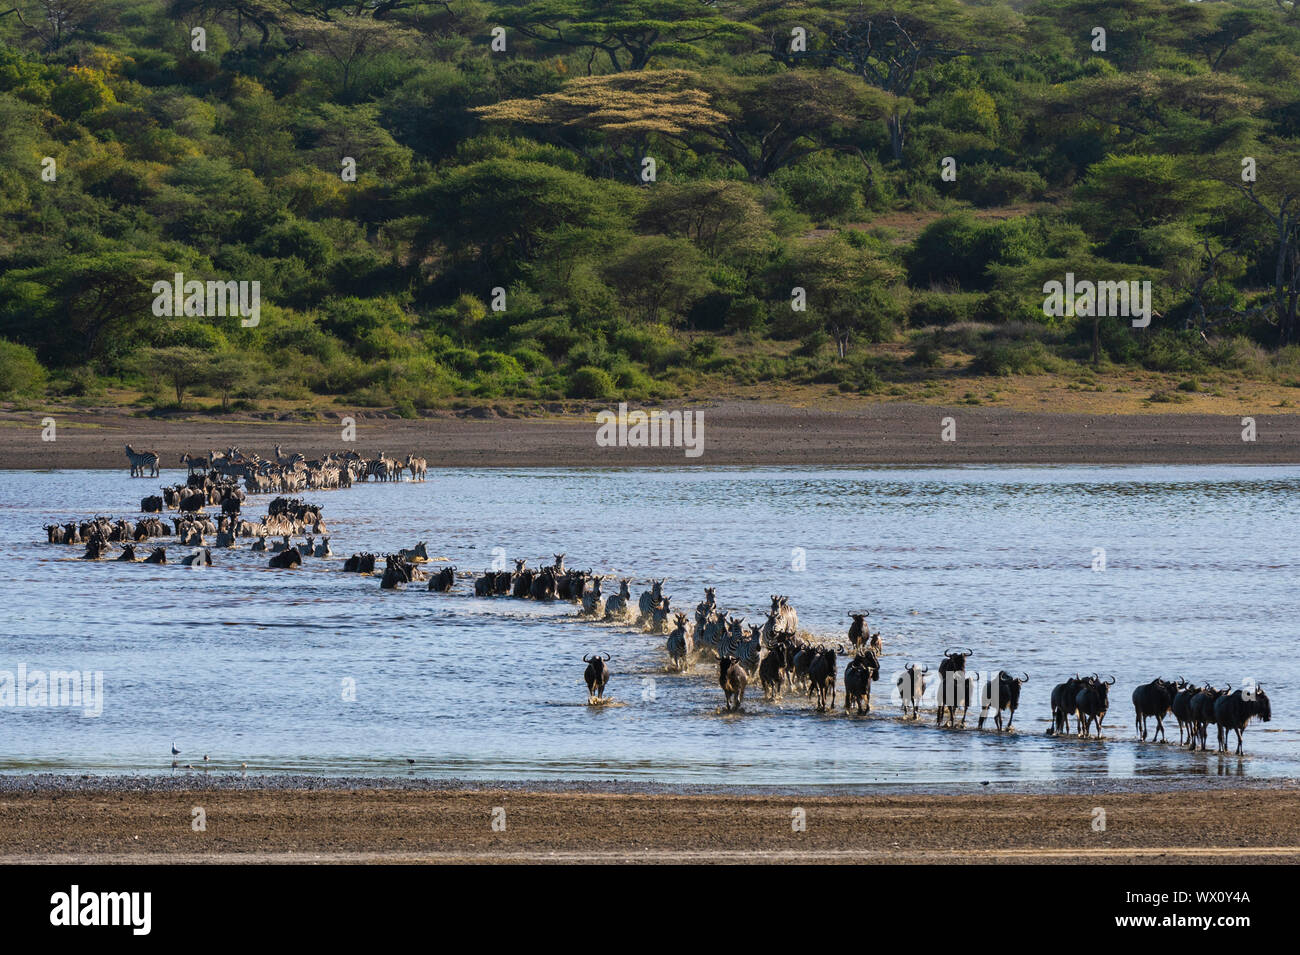 La migrazione di pianure zebre (Equus quagga) e wildebeests (Connochaetes taurinus), attraversando il lago Ndutu, Serengeti, UNESCO, Tanzania, Africa orientale, Africa Foto Stock